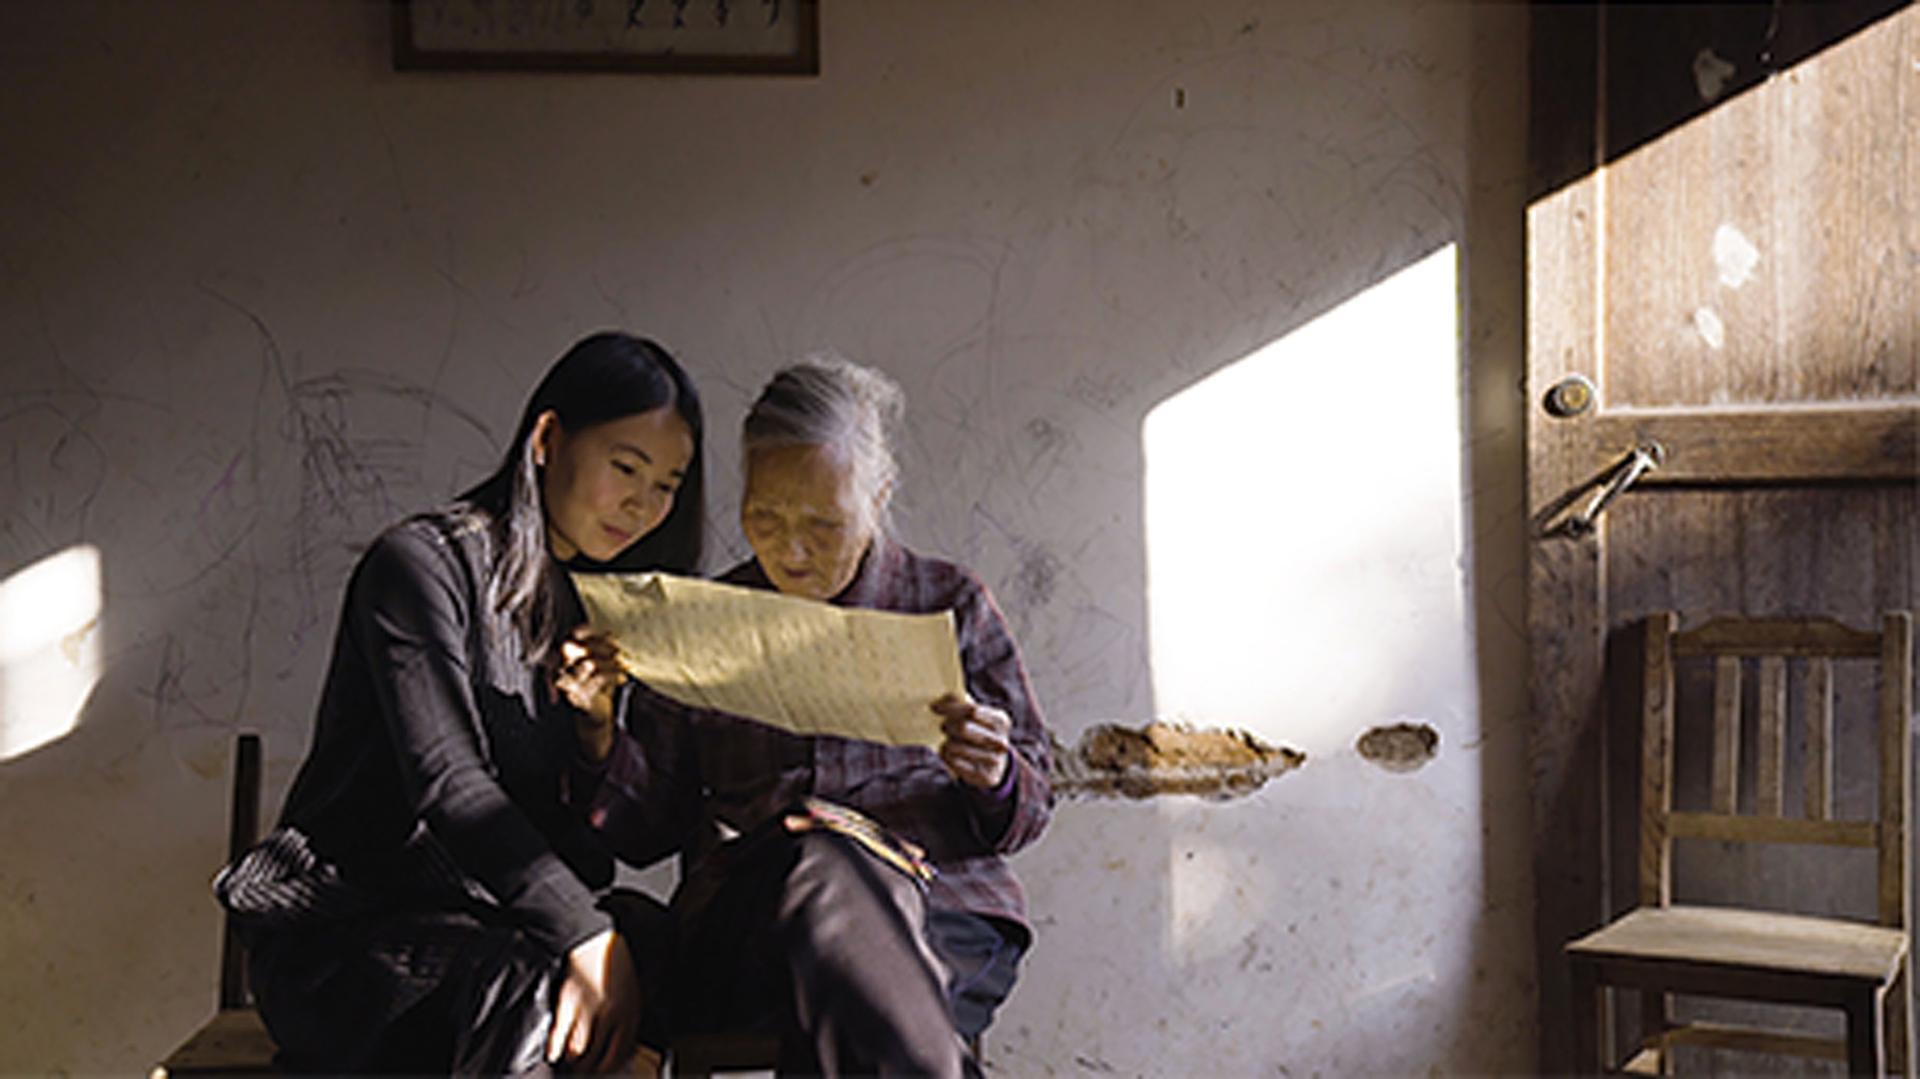 Hu Xin and He Yan Xin as seen in the film "Hidden Letters"